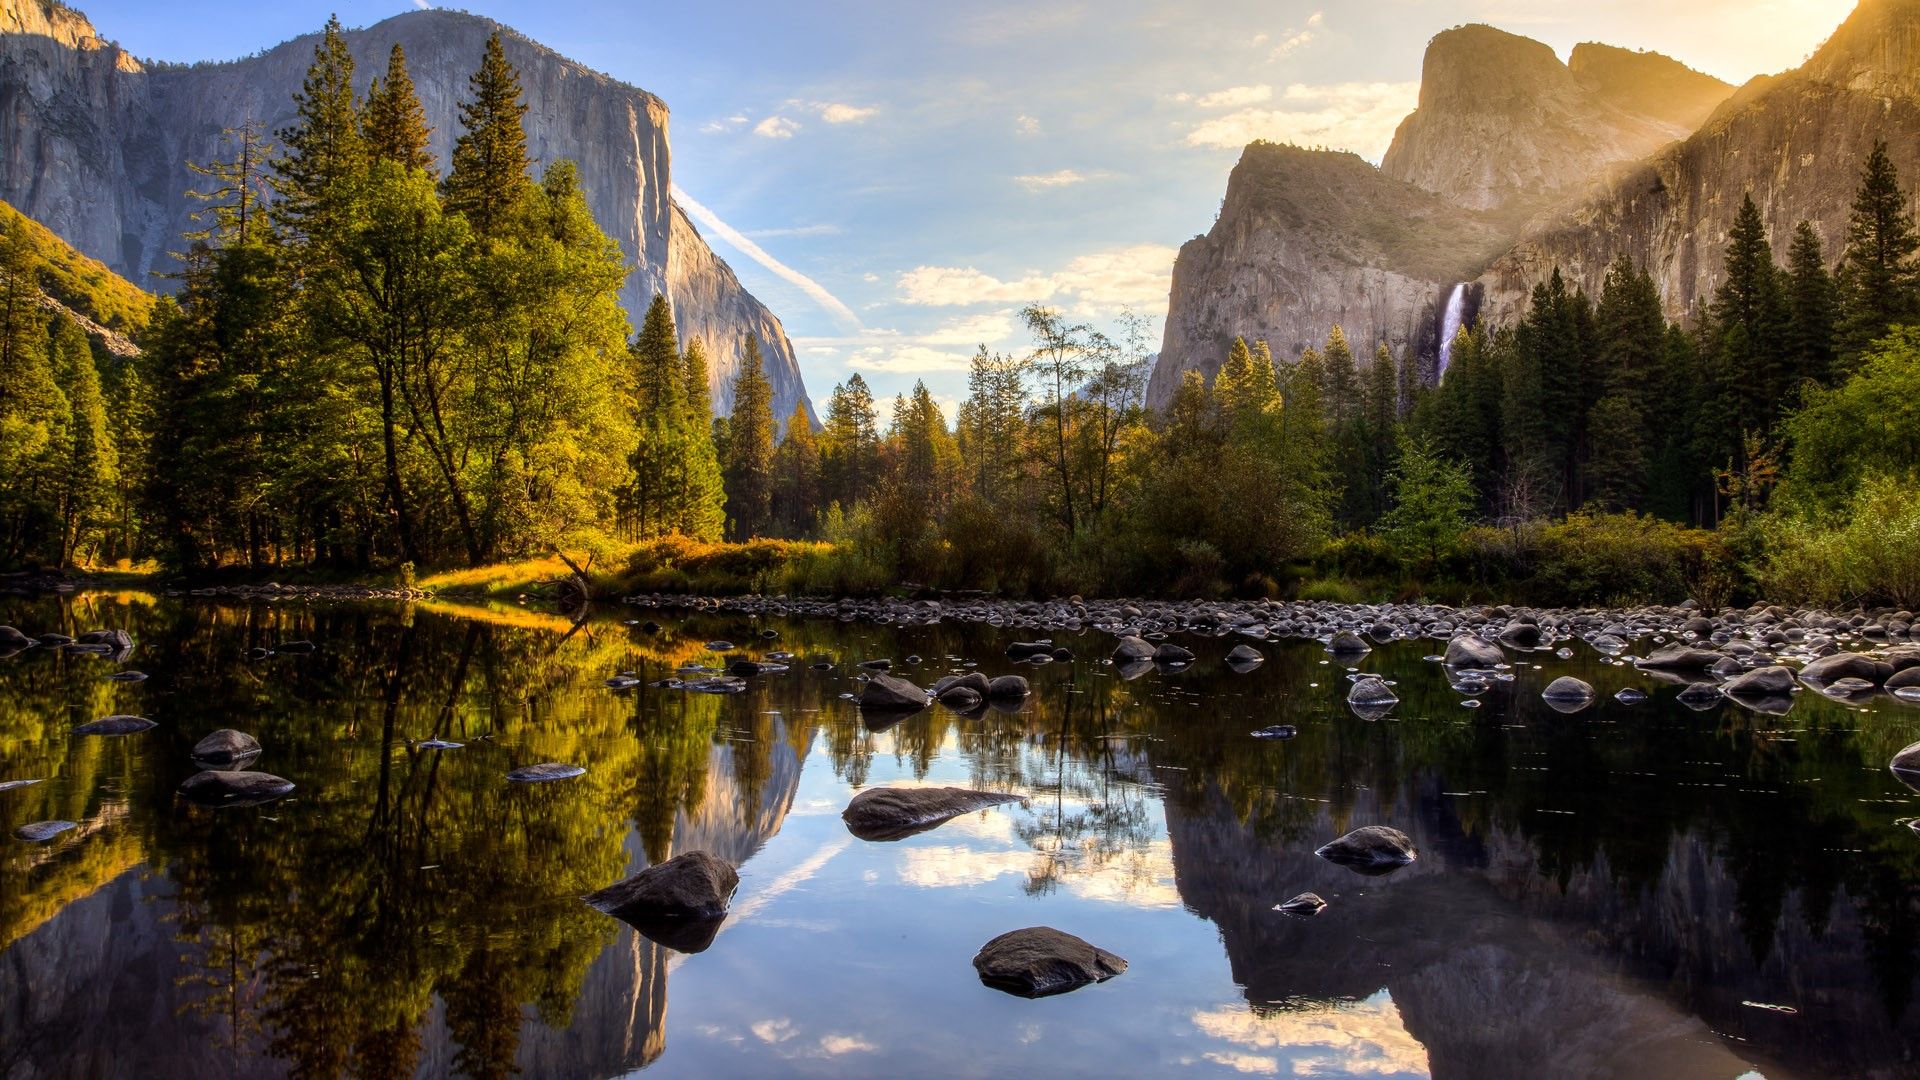 Sunrise on Yosemite Valley, Yosemite National Park, California, USA. Windows 10 Spotlight Image